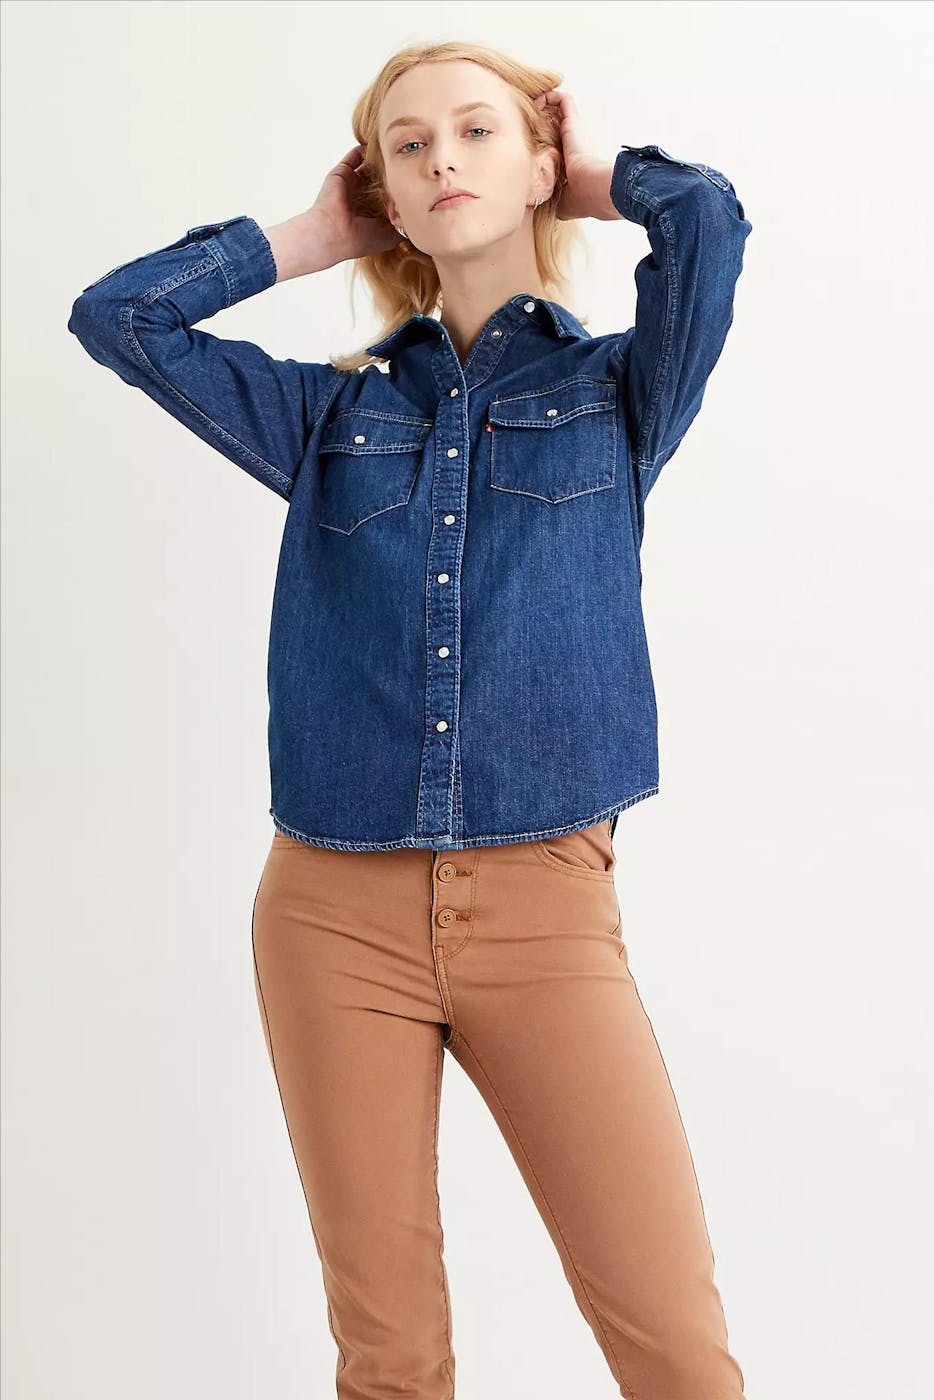 Levi's - Donkerblauw Essential Western jeanshemd